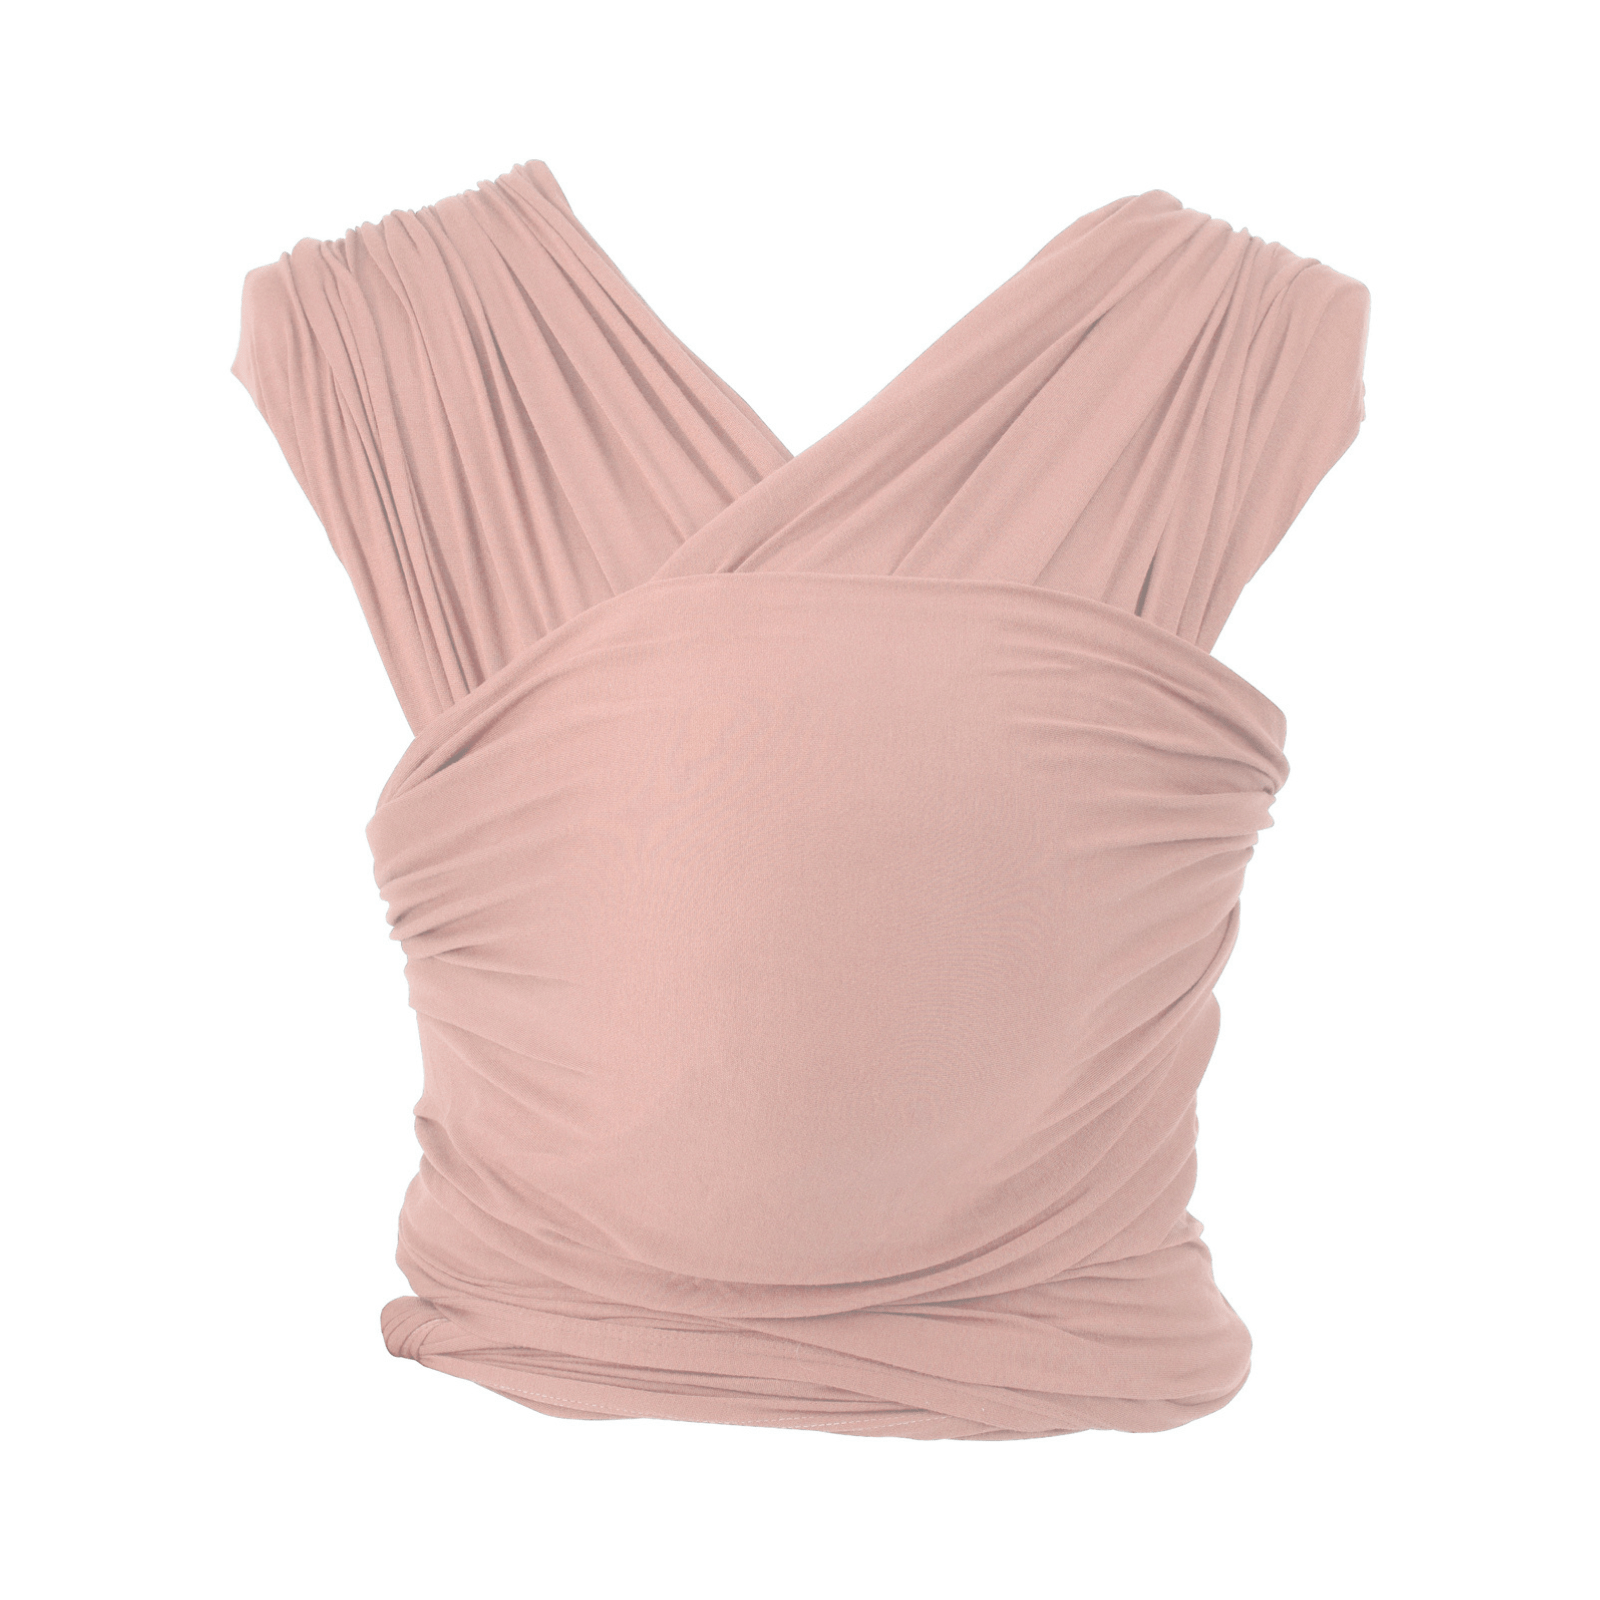 Ergobaby Aura Baby Wrap in Blush Pink Baby Carriers WLABLUSH 1220000201651